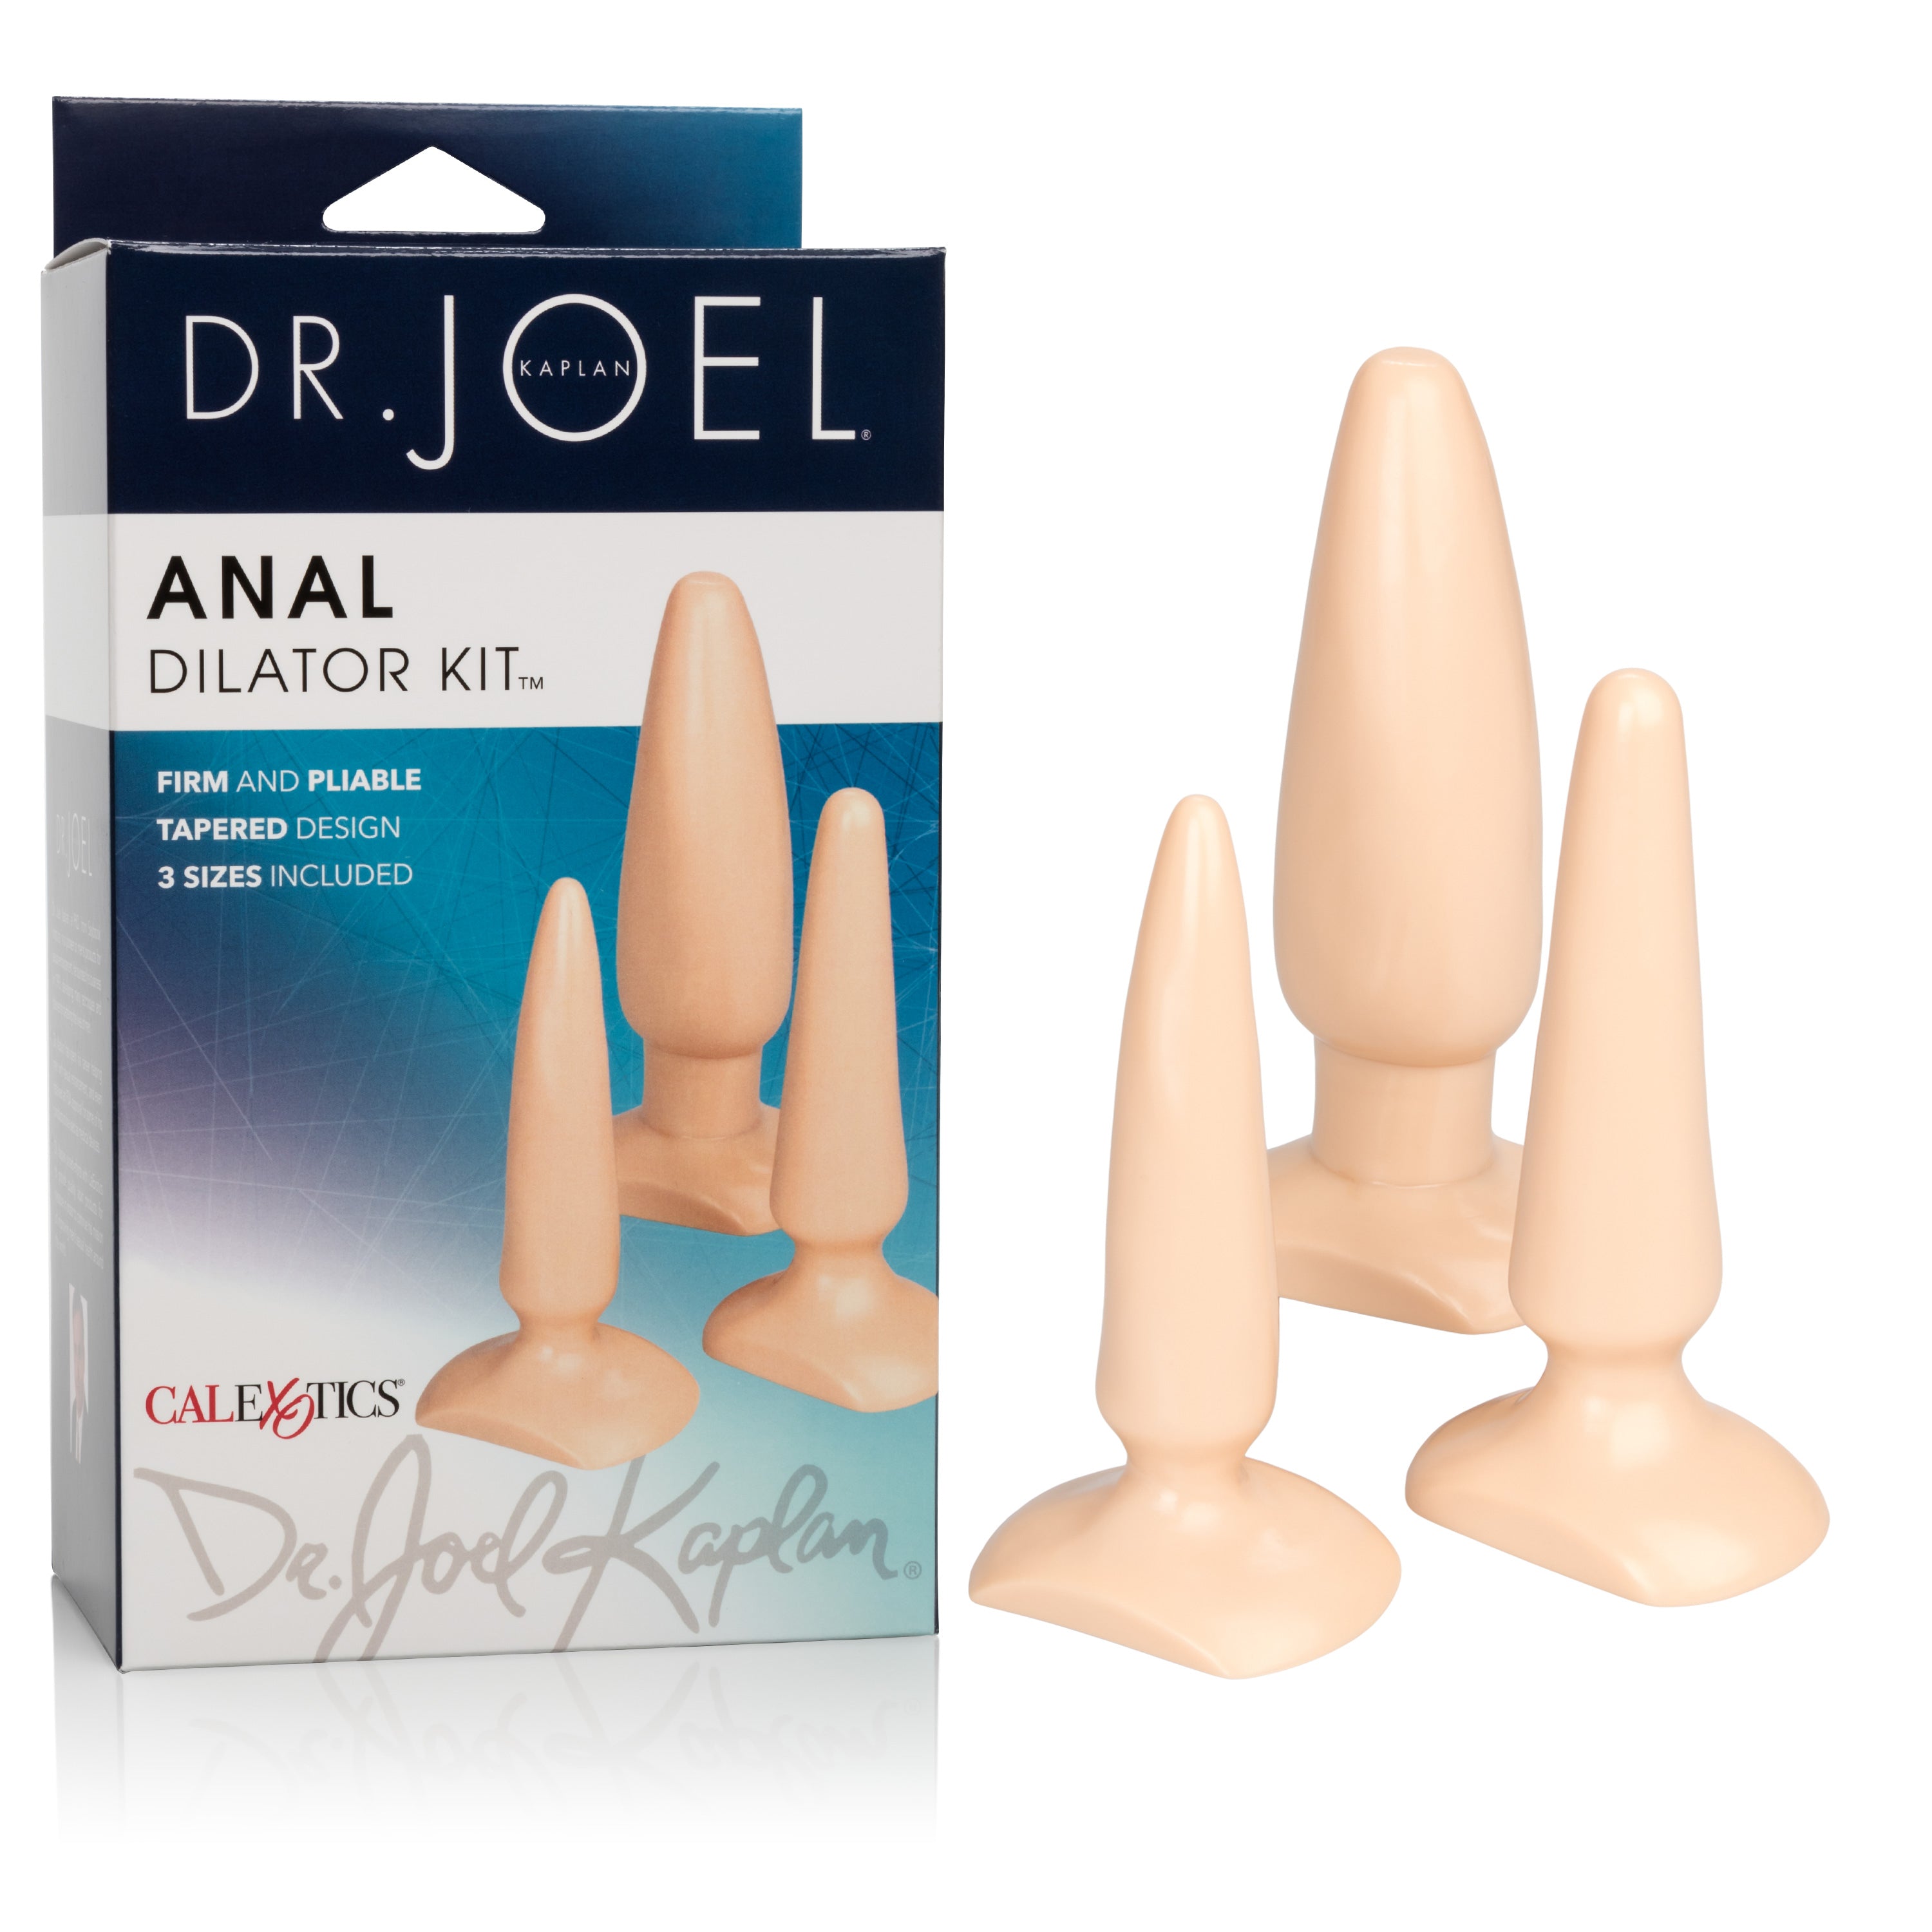 Dr. Joel's Anal Dilator Kit SE5641013